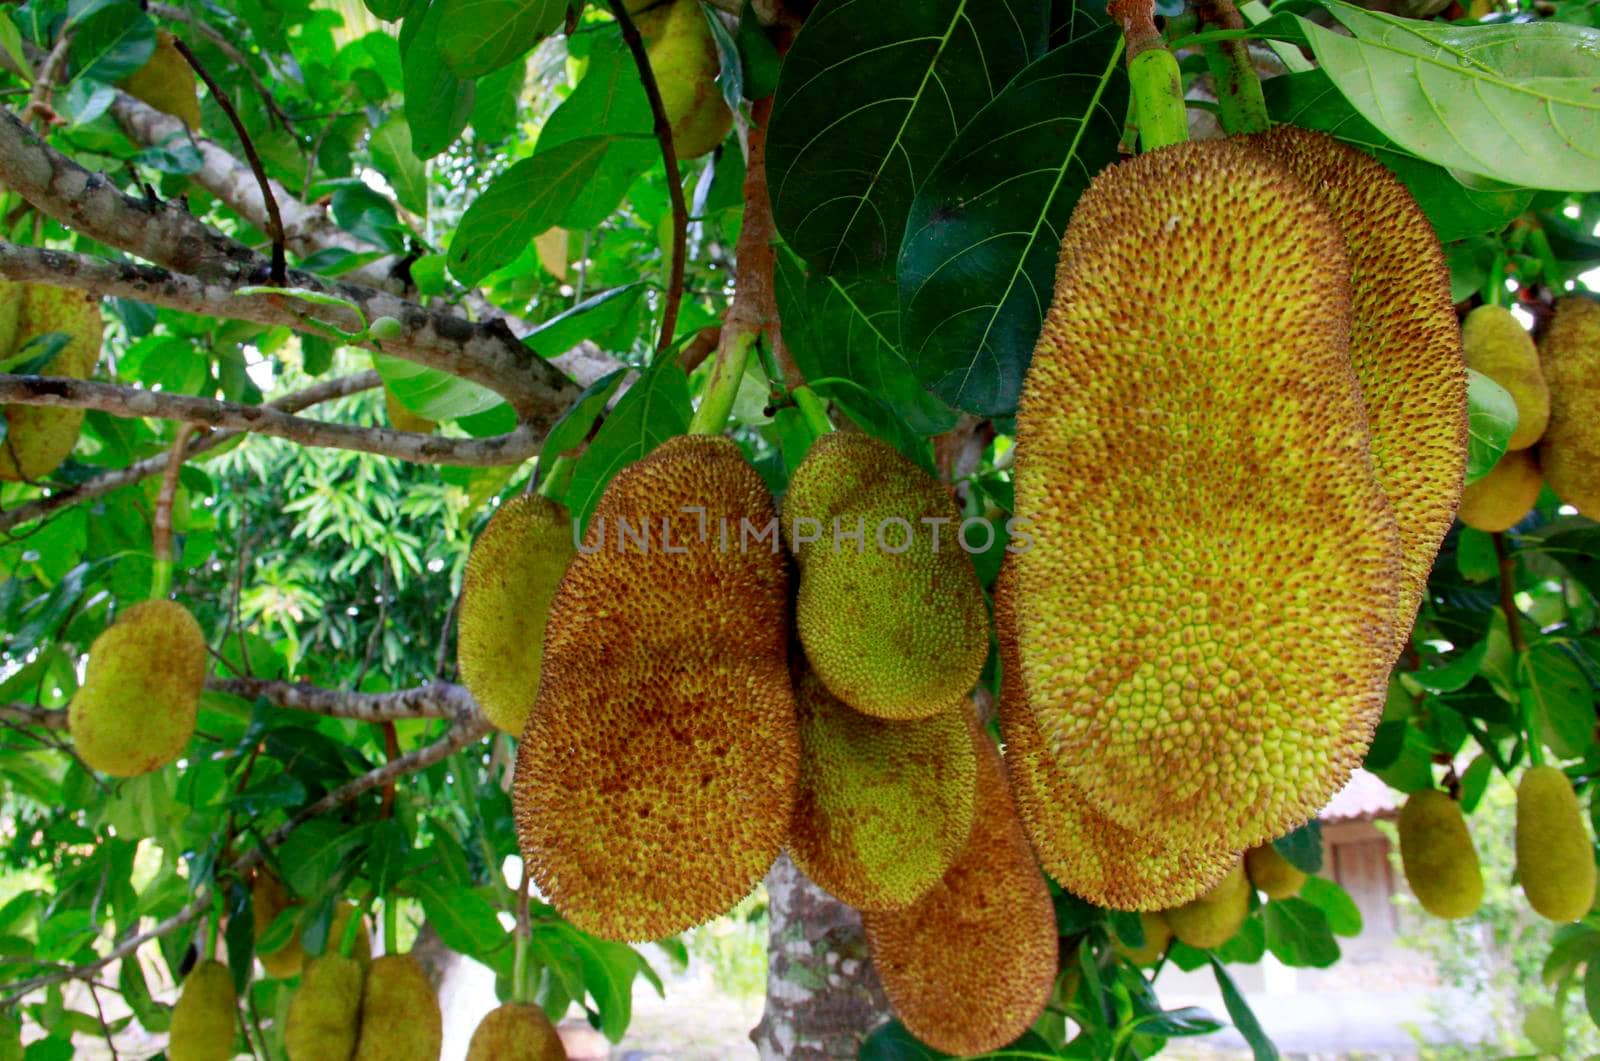 jackfruit in plantation in the city of salvador by joasouza